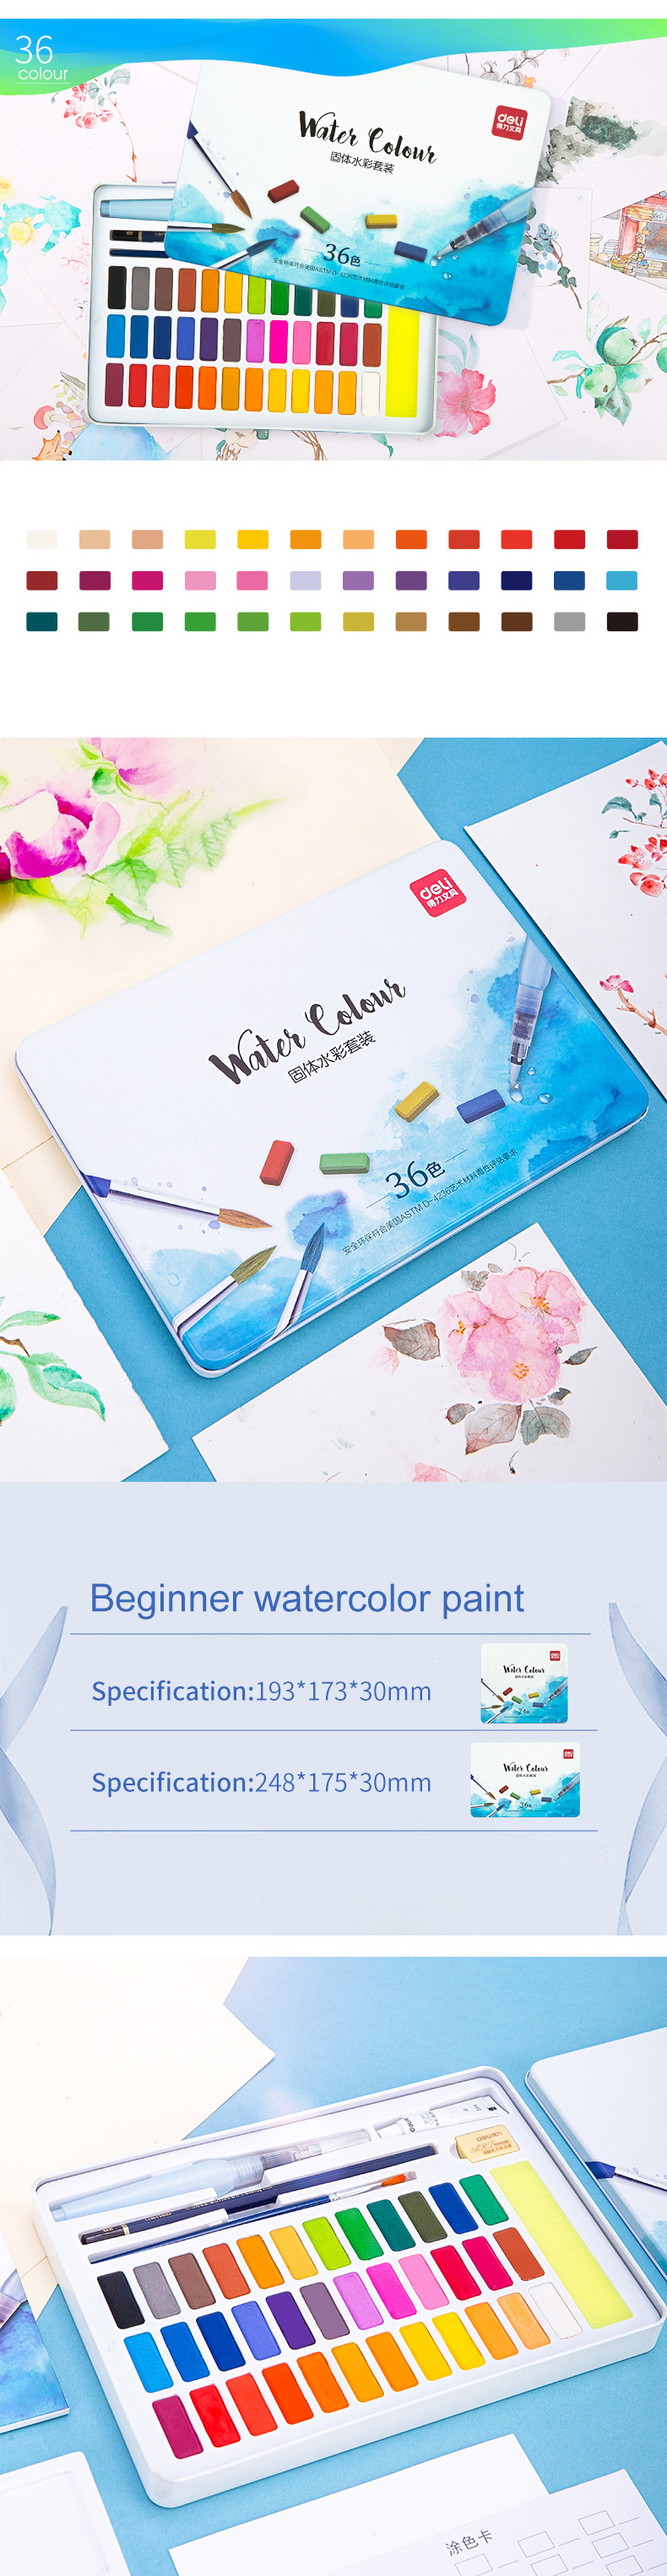 XM-Ecosystem-Deli-2436-Colors-Solid-Watercolor-Paint-Set-Metal-Iron-Box-Hand-Painted-Watercolor-Pigm-1559153-3